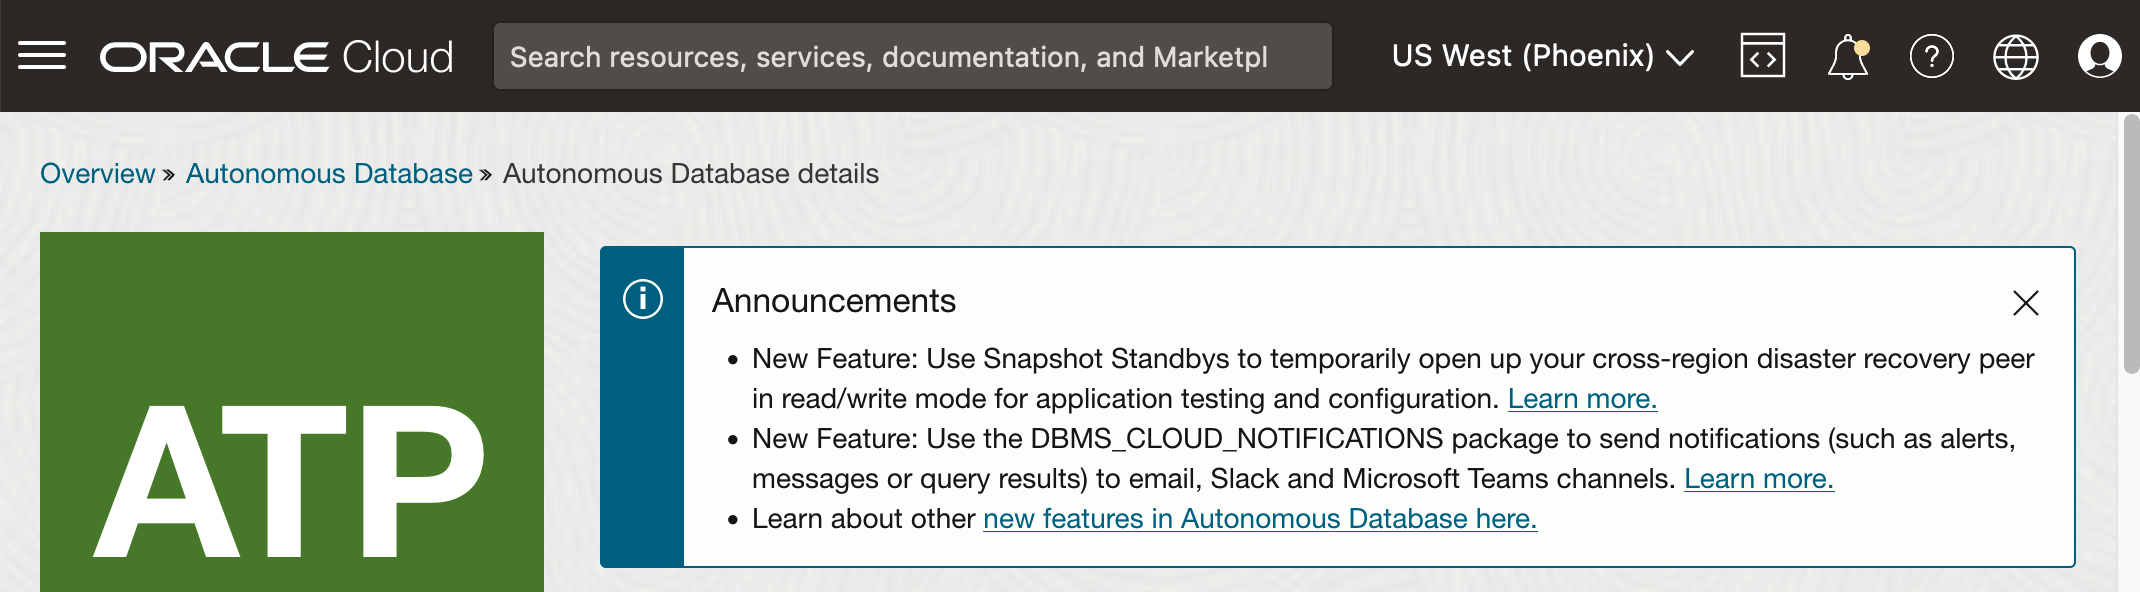 New features announced for Oracle Autonomous Database